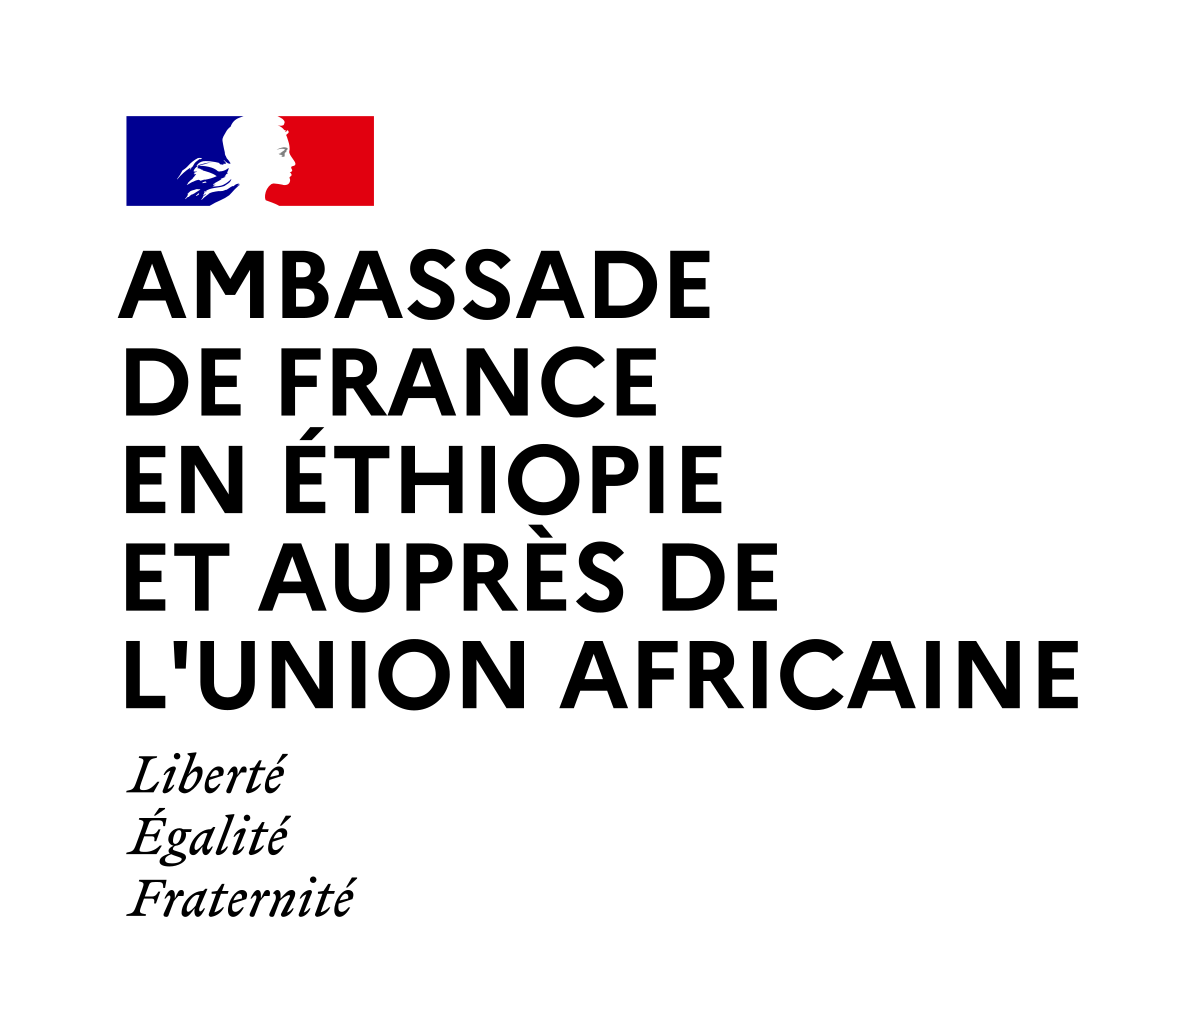 Ambassade de France en Éthiopie logo.png